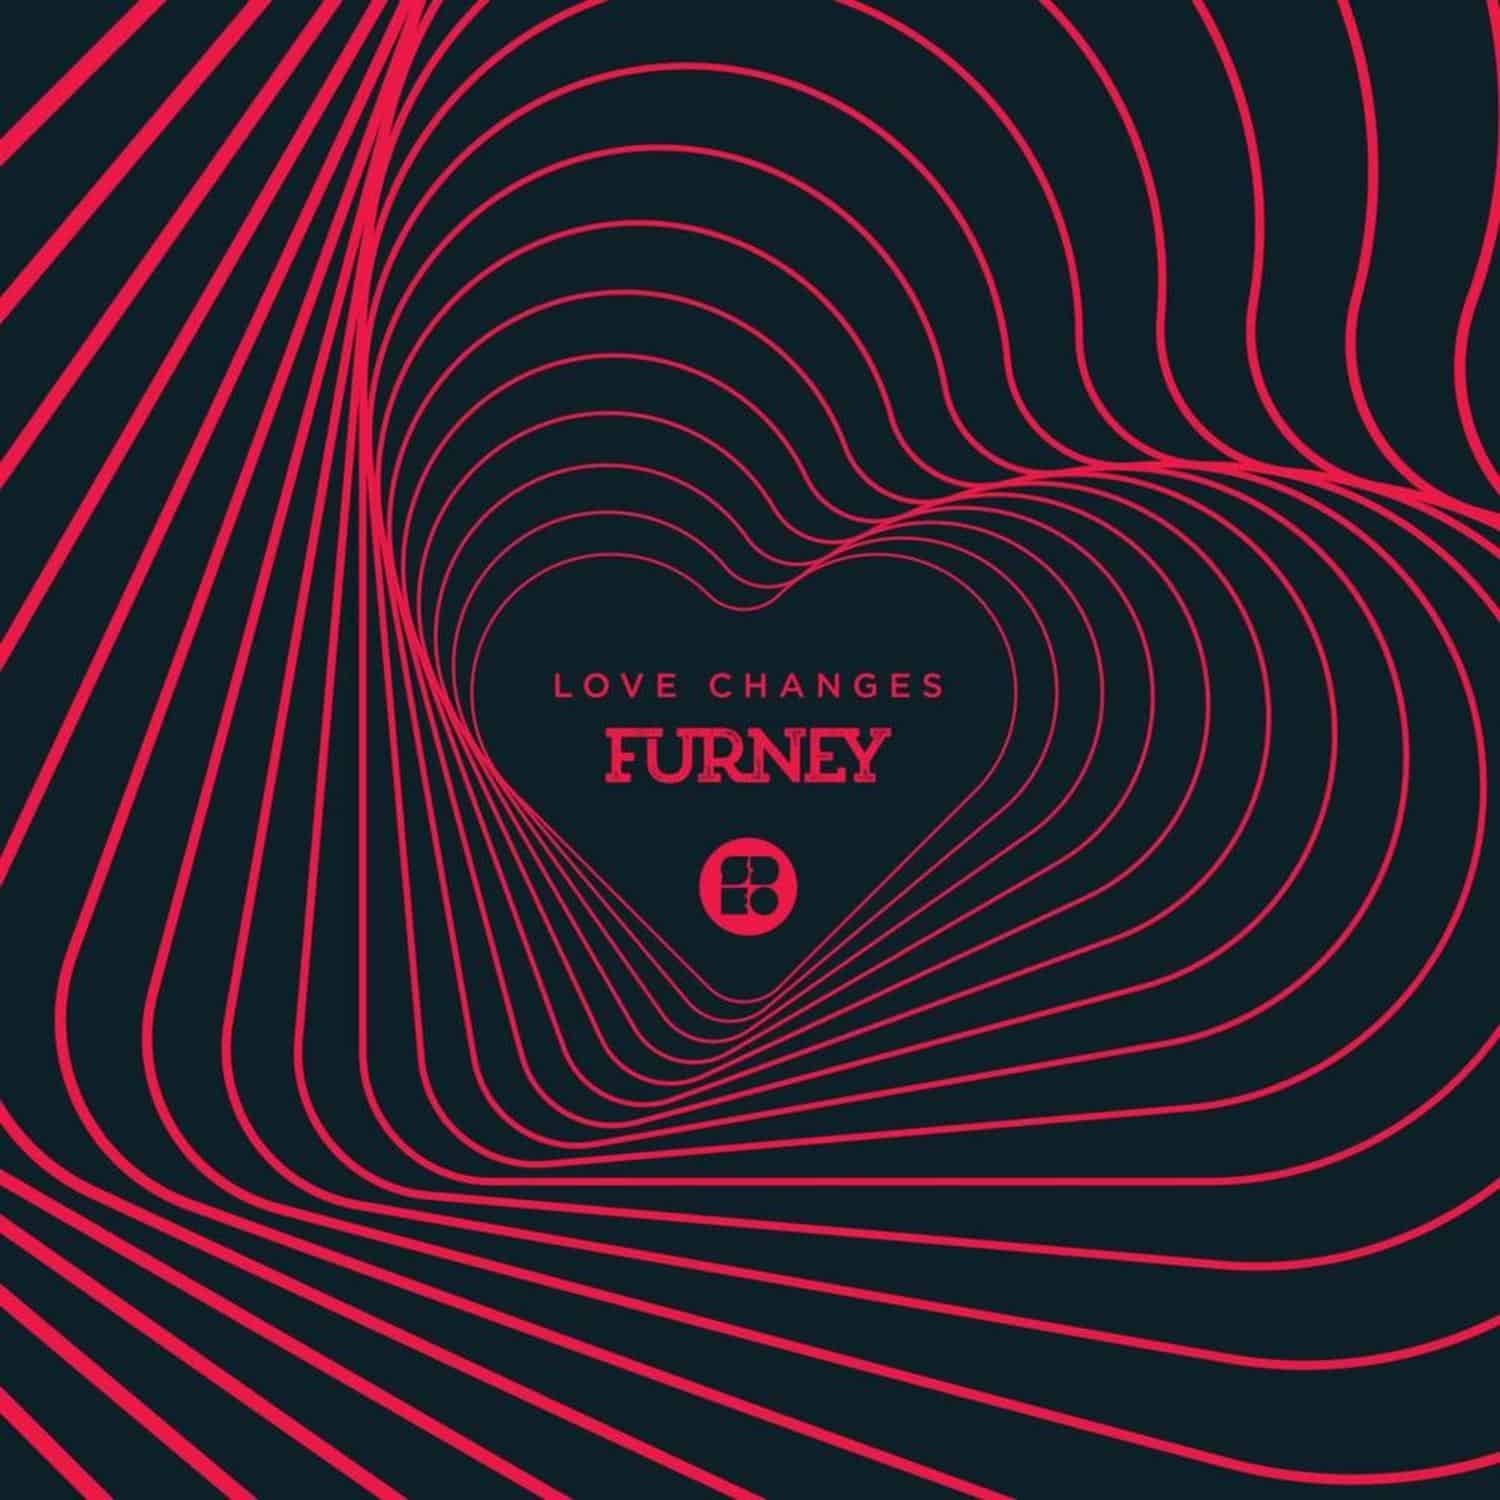 Furney - LOVE CHANGES 